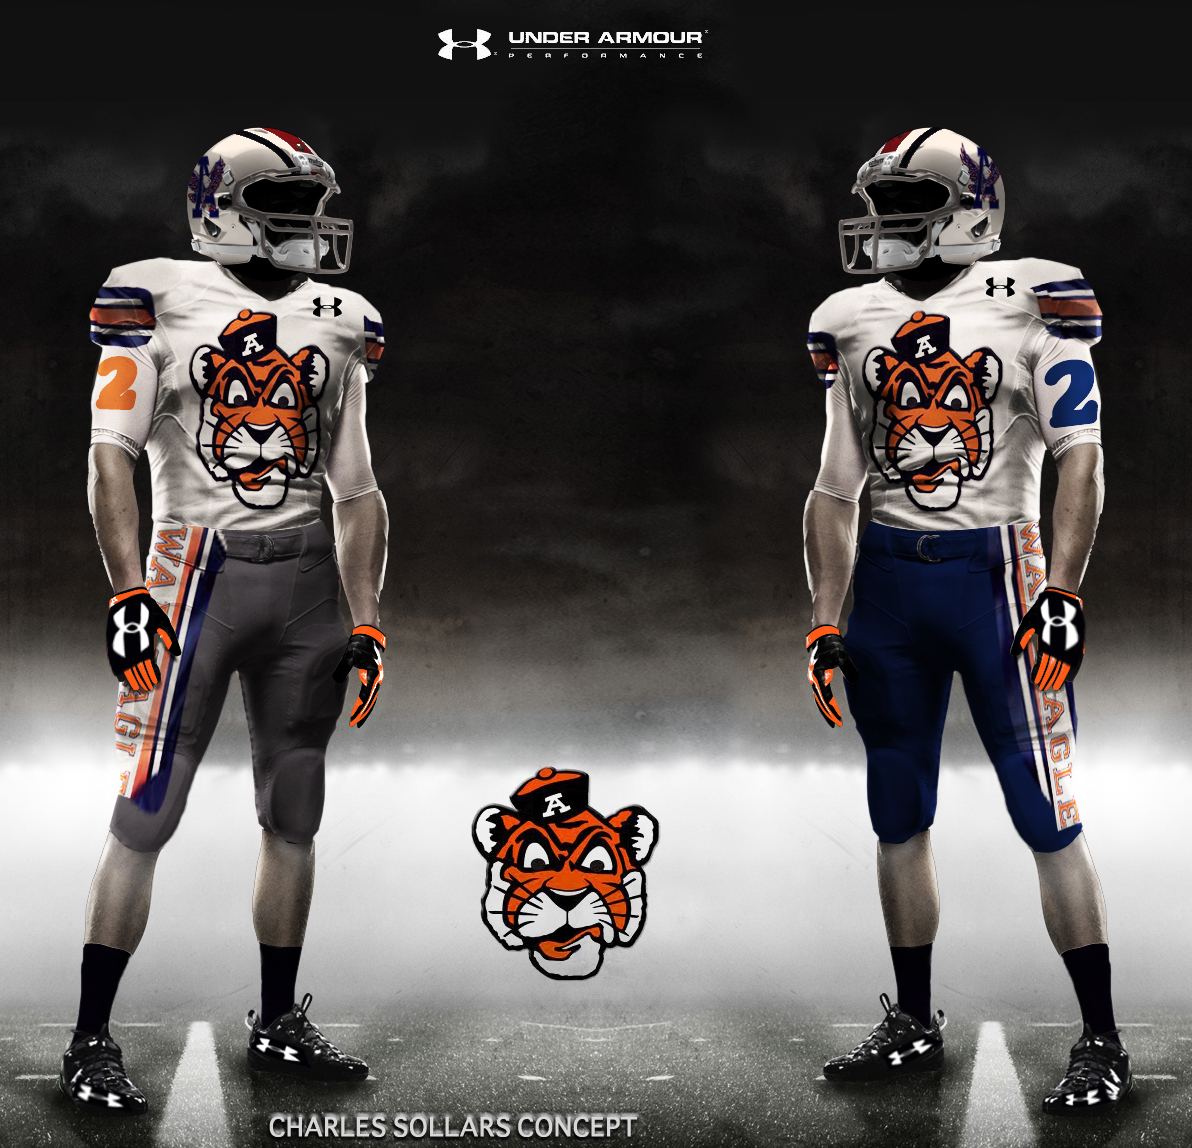 Check out these concept uniform designs for Auburn 